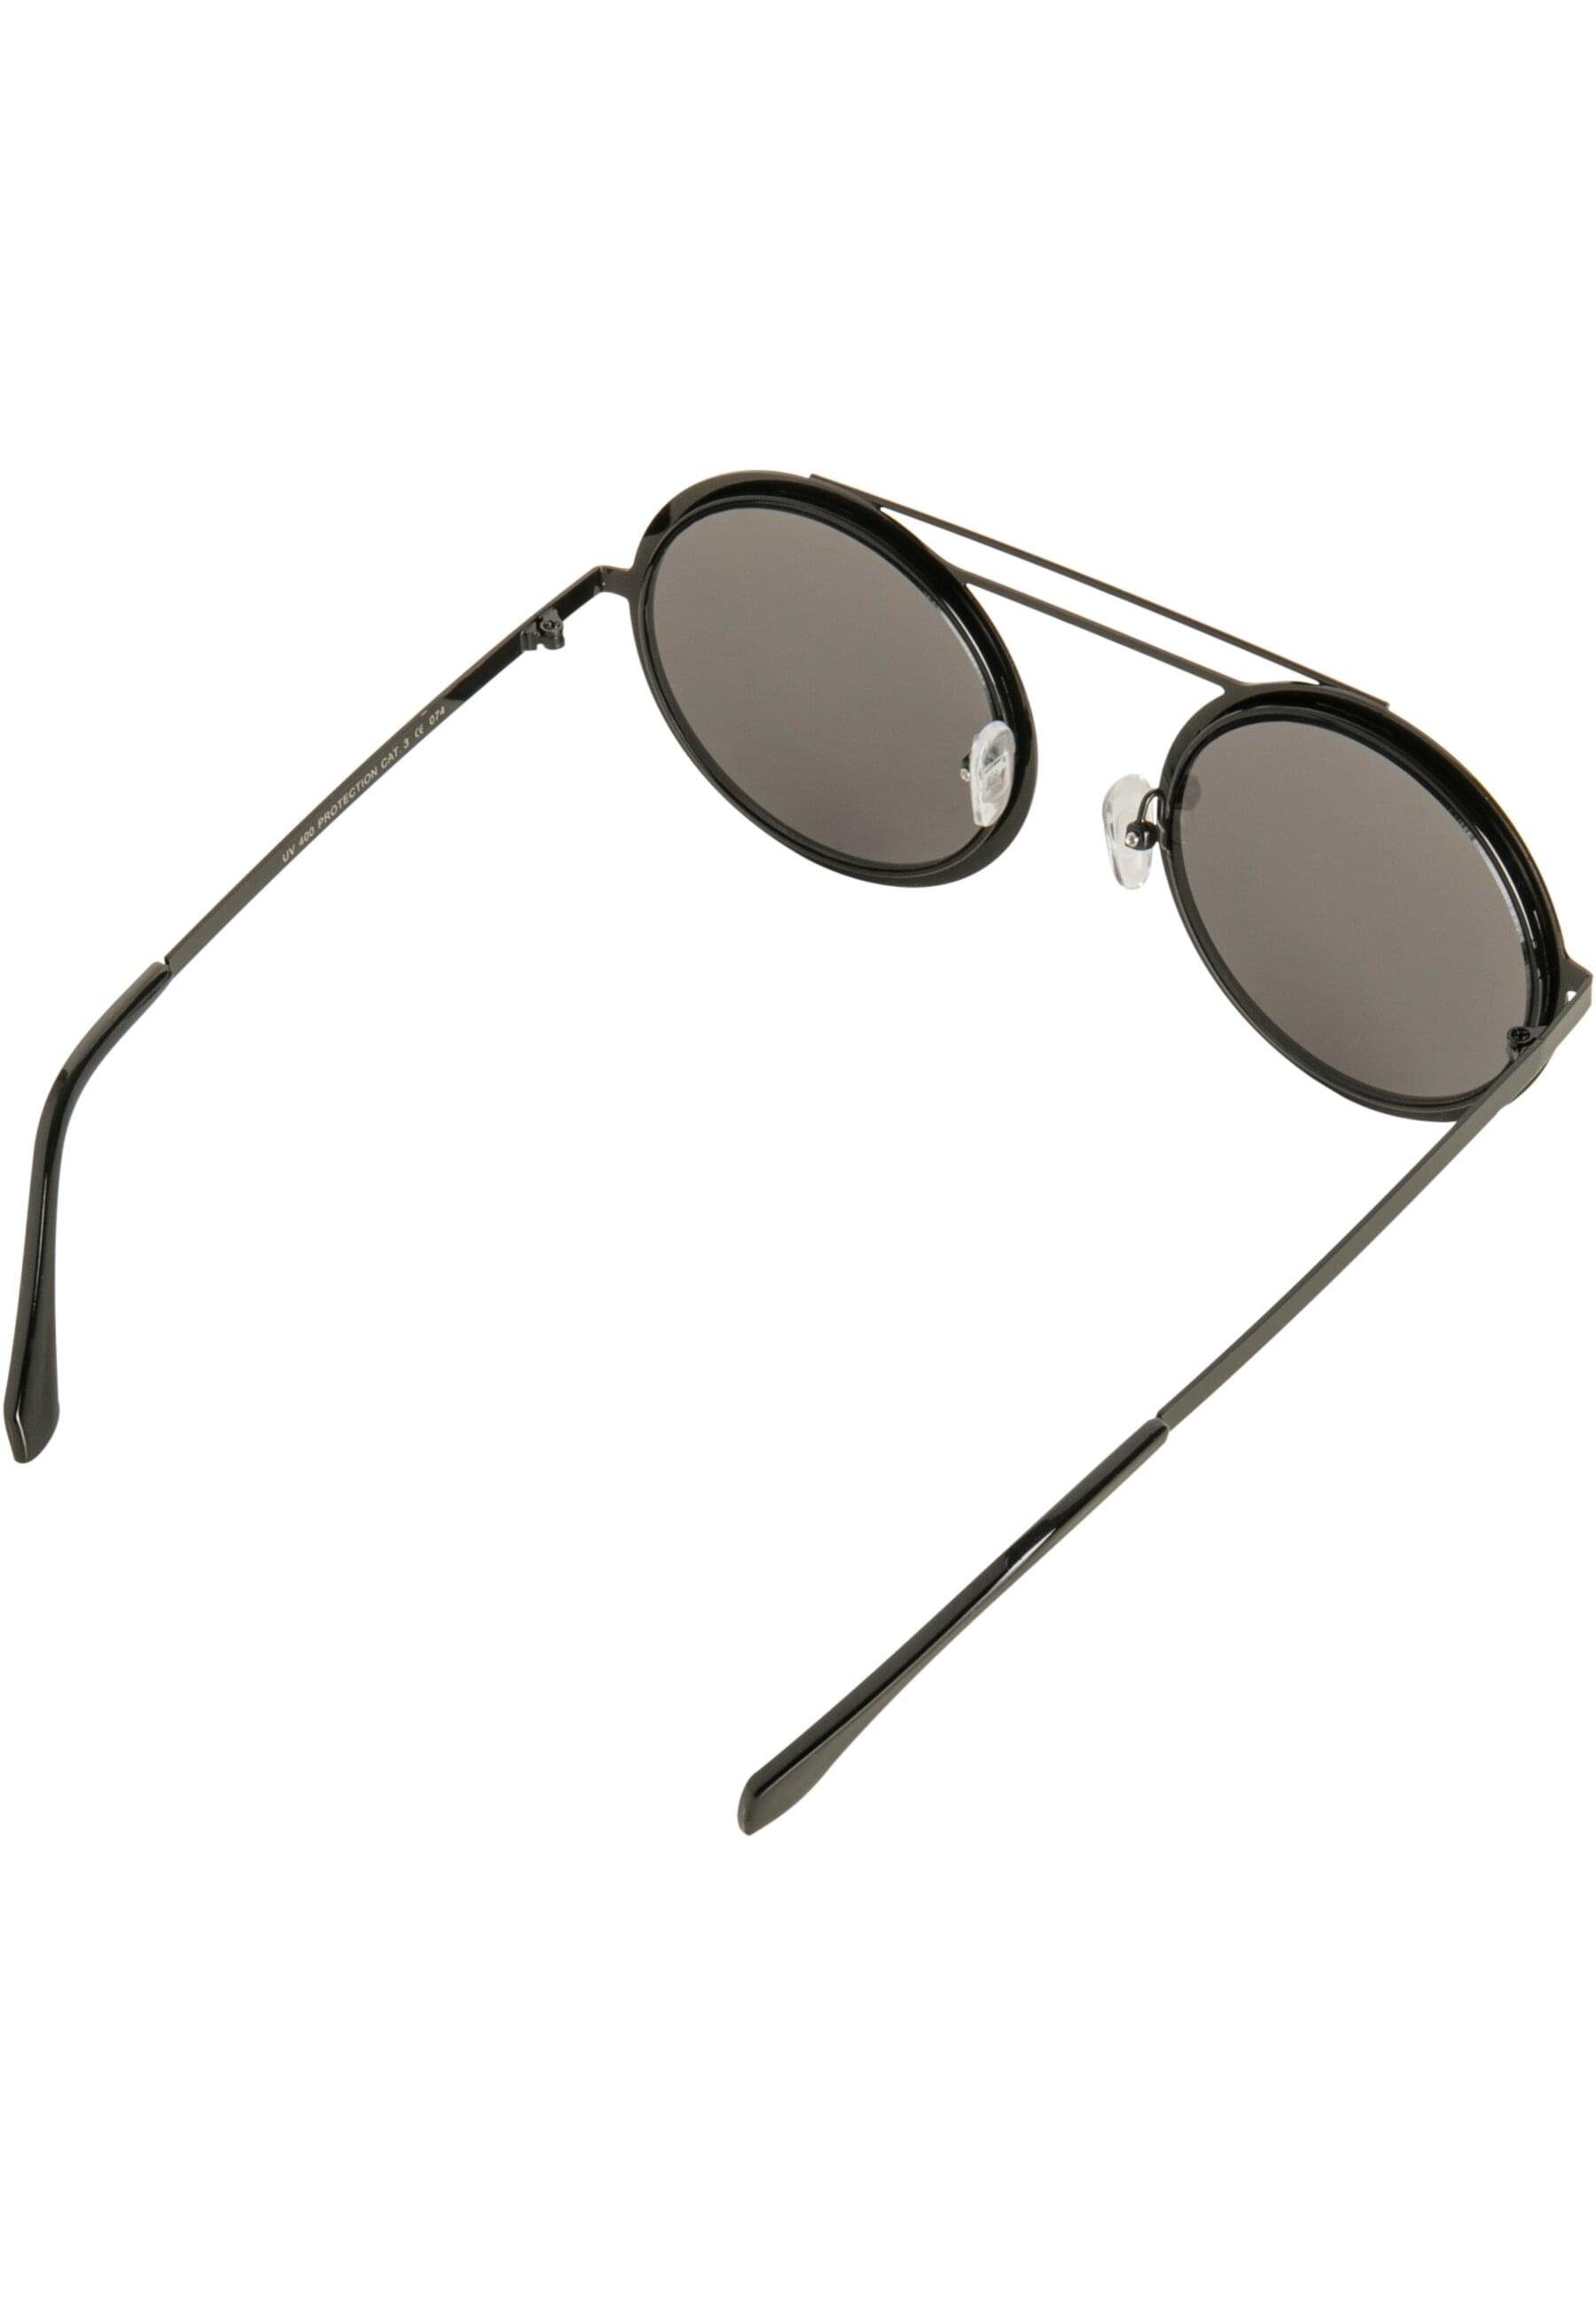 URBAN CLASSICS Sonnenbrille Unisex 104 Chain black/black Sunglasses